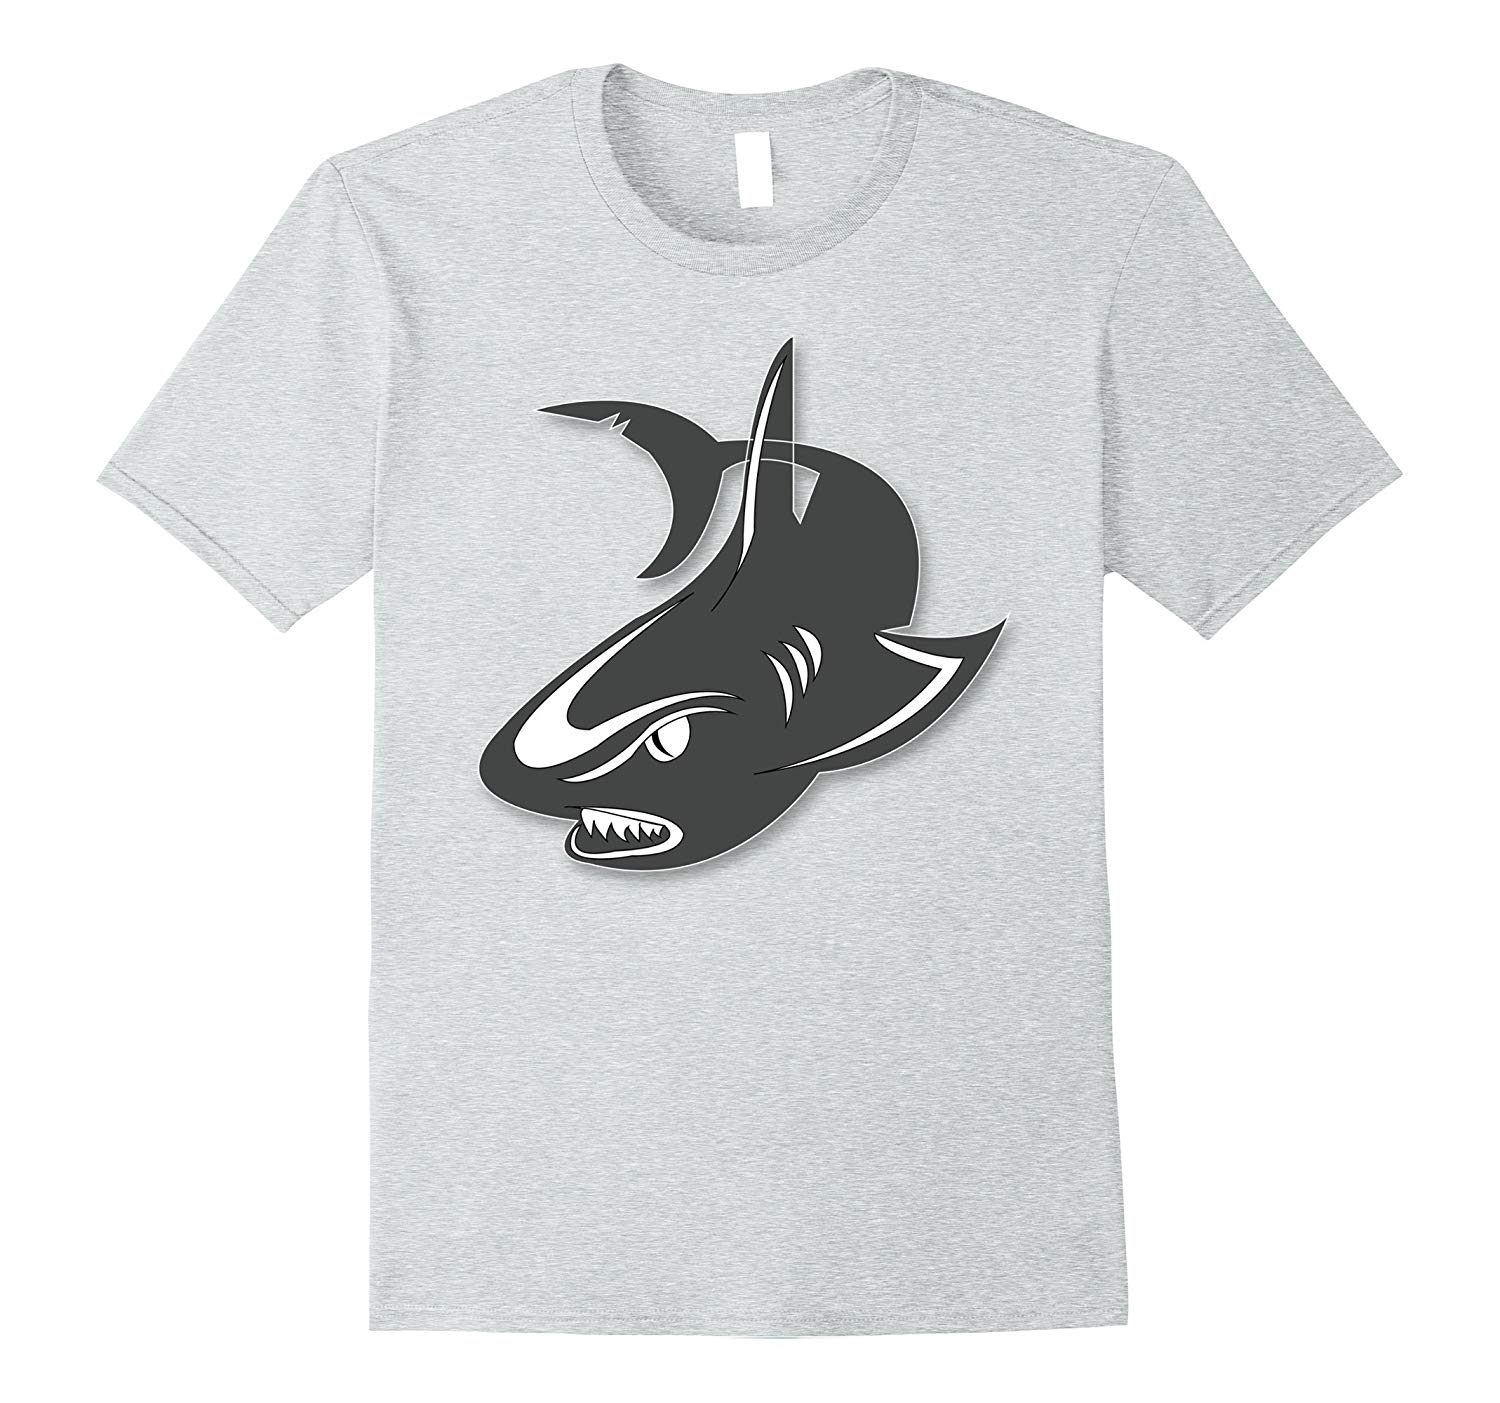 Cool Shark Logo - Cool Shark Graphic Print Tshirt Tee By Sharks Made Better PL